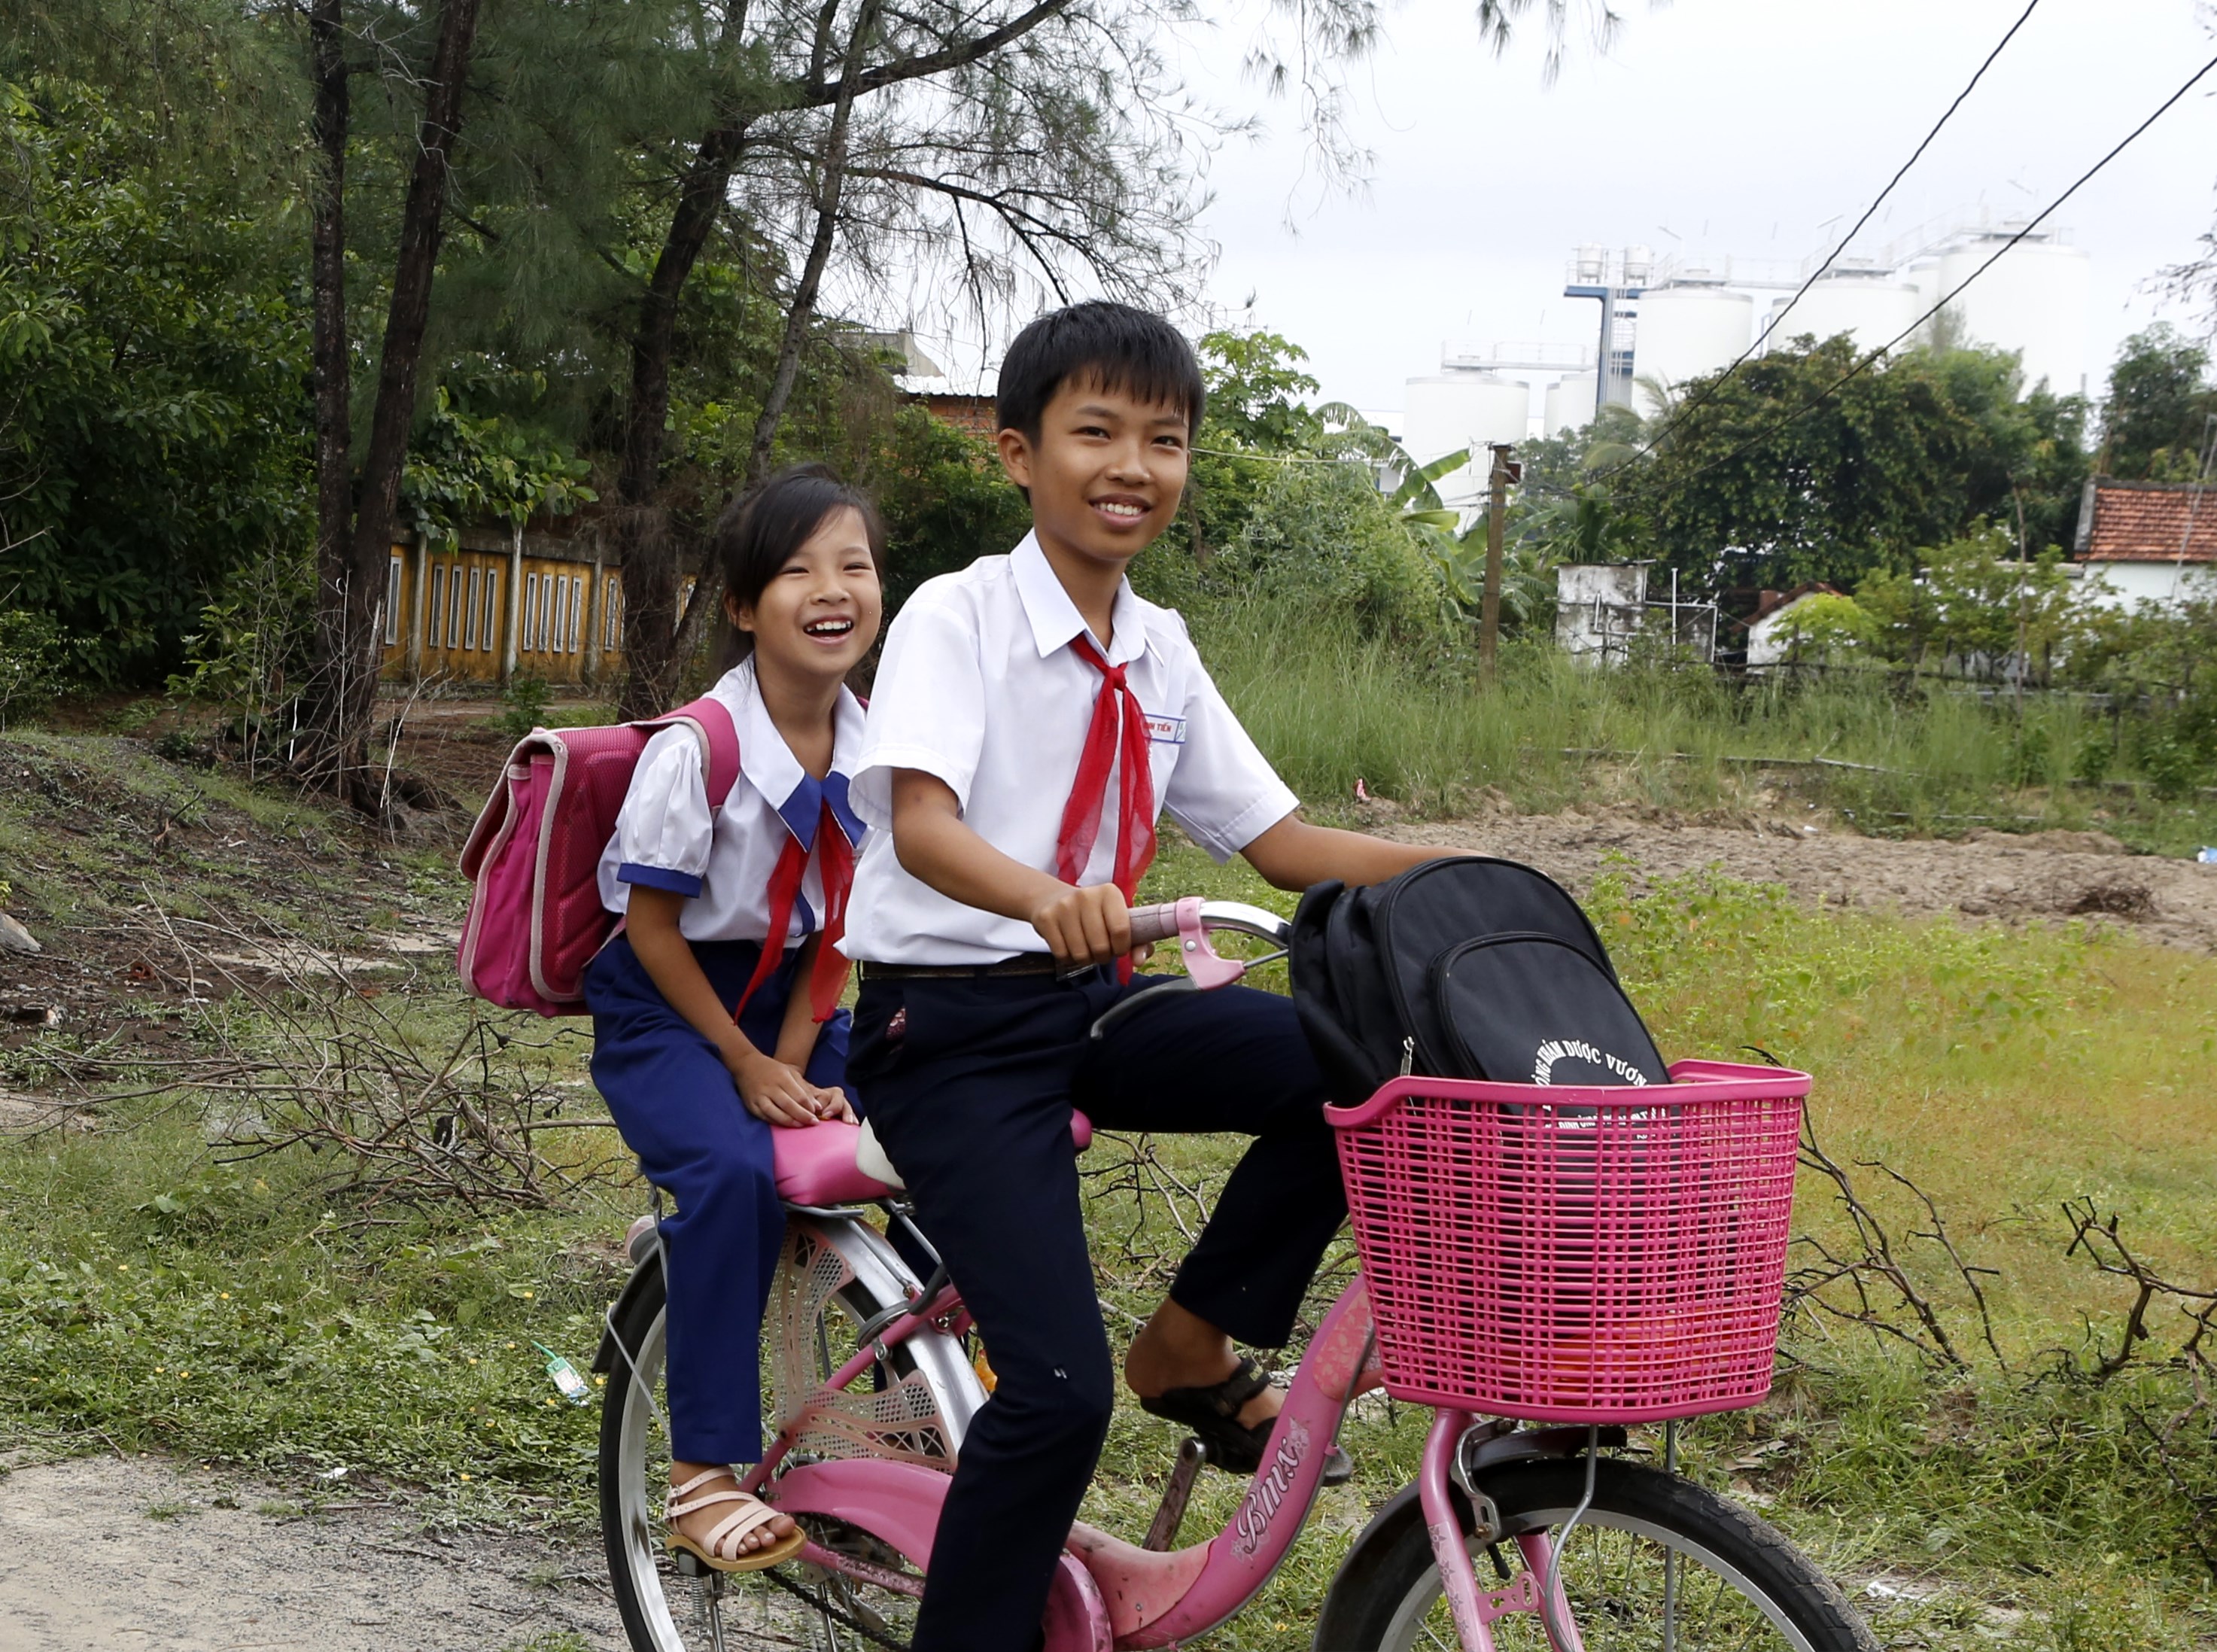 Skolebarn i Vietnam. Foto: SOS-barnebyer